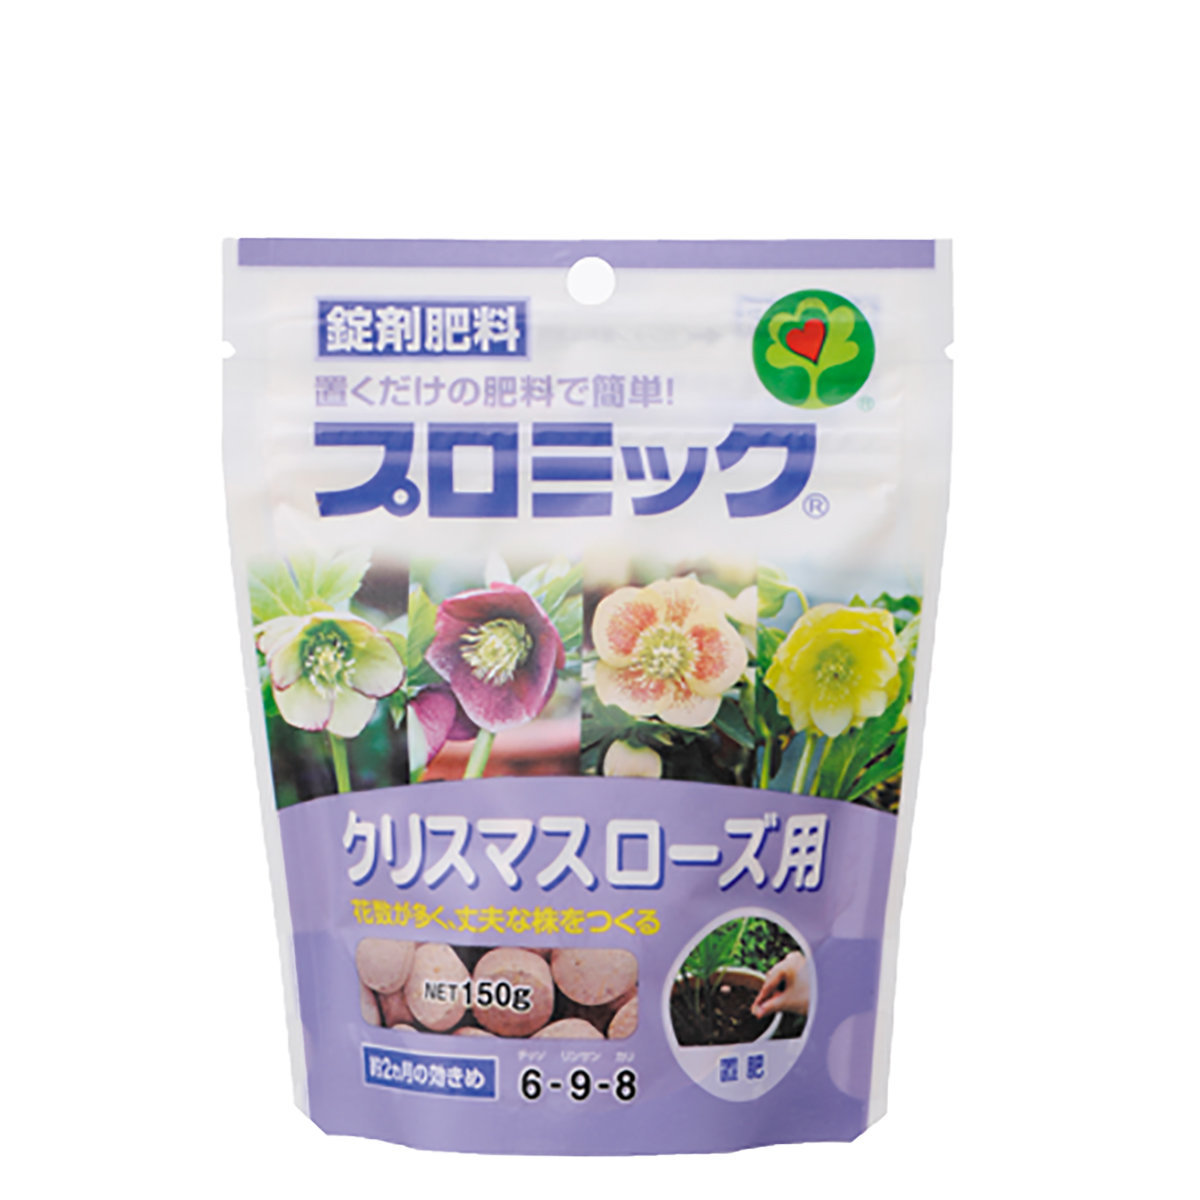 Hyponex 日本花寶6 9 8 紫蘿蘭植物專用錠劑肥料150g 園藝粒狀放置肥料 花肥 紫羅蘭 Hktvmall 香港最大網購平台